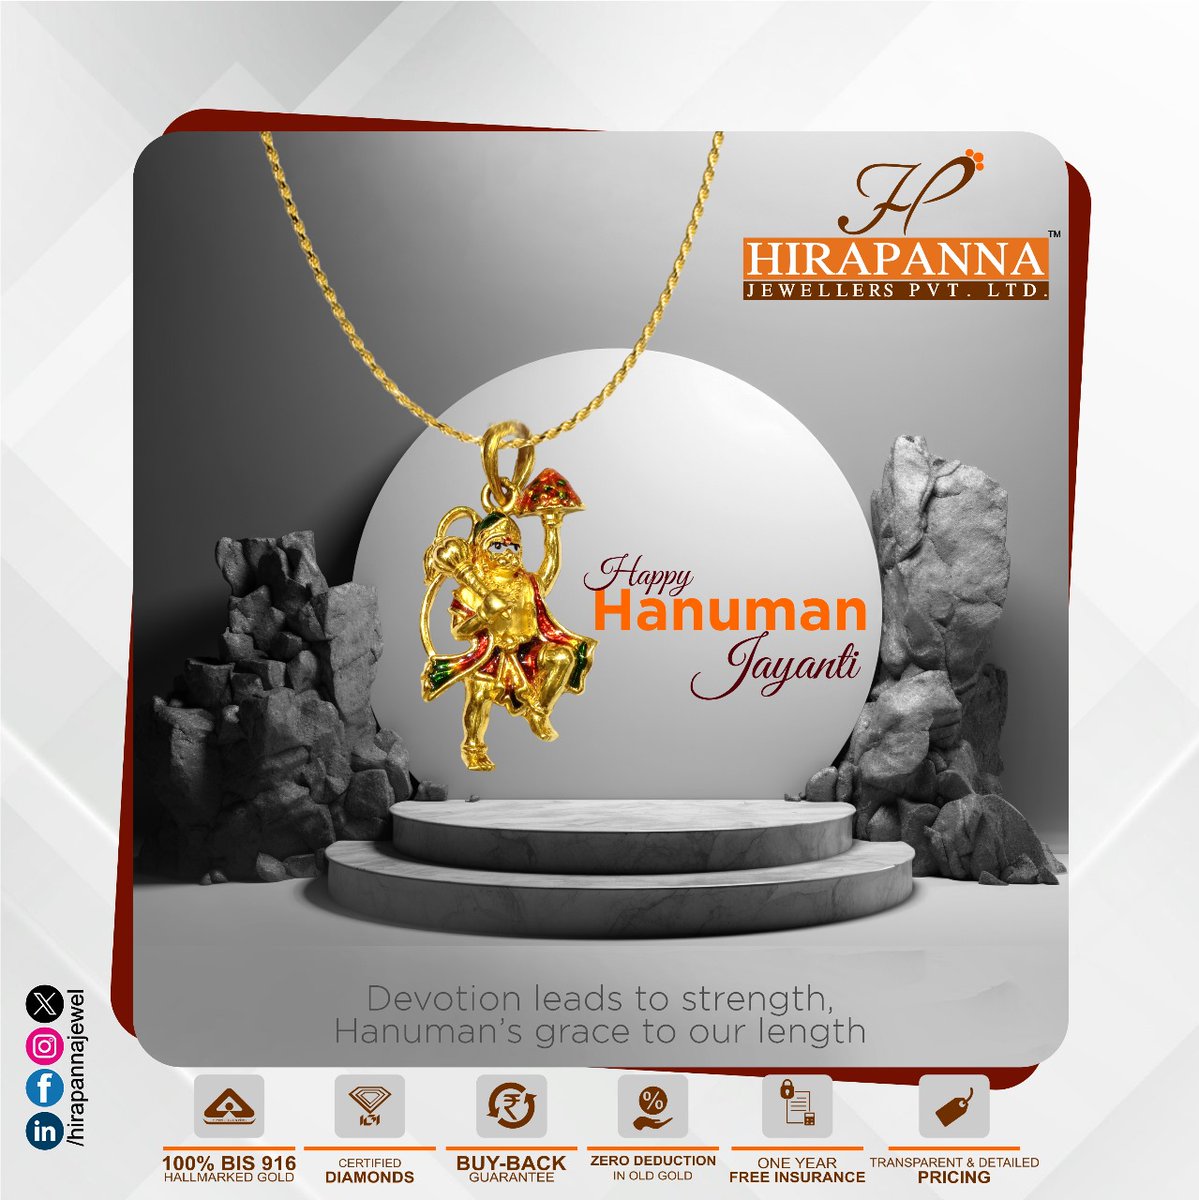 Happy Hanuman Jayanti!
Devotion leads to strength,
Hanuman's grace to our length.

.
.
#HanumanJayanti #hirapannajewels #hpj #goldchoker #chockers #hirapanna #hirapannajewellers #goldearings #goldjewel #goldforyou #designercollection #designerjewellery #bewowindia